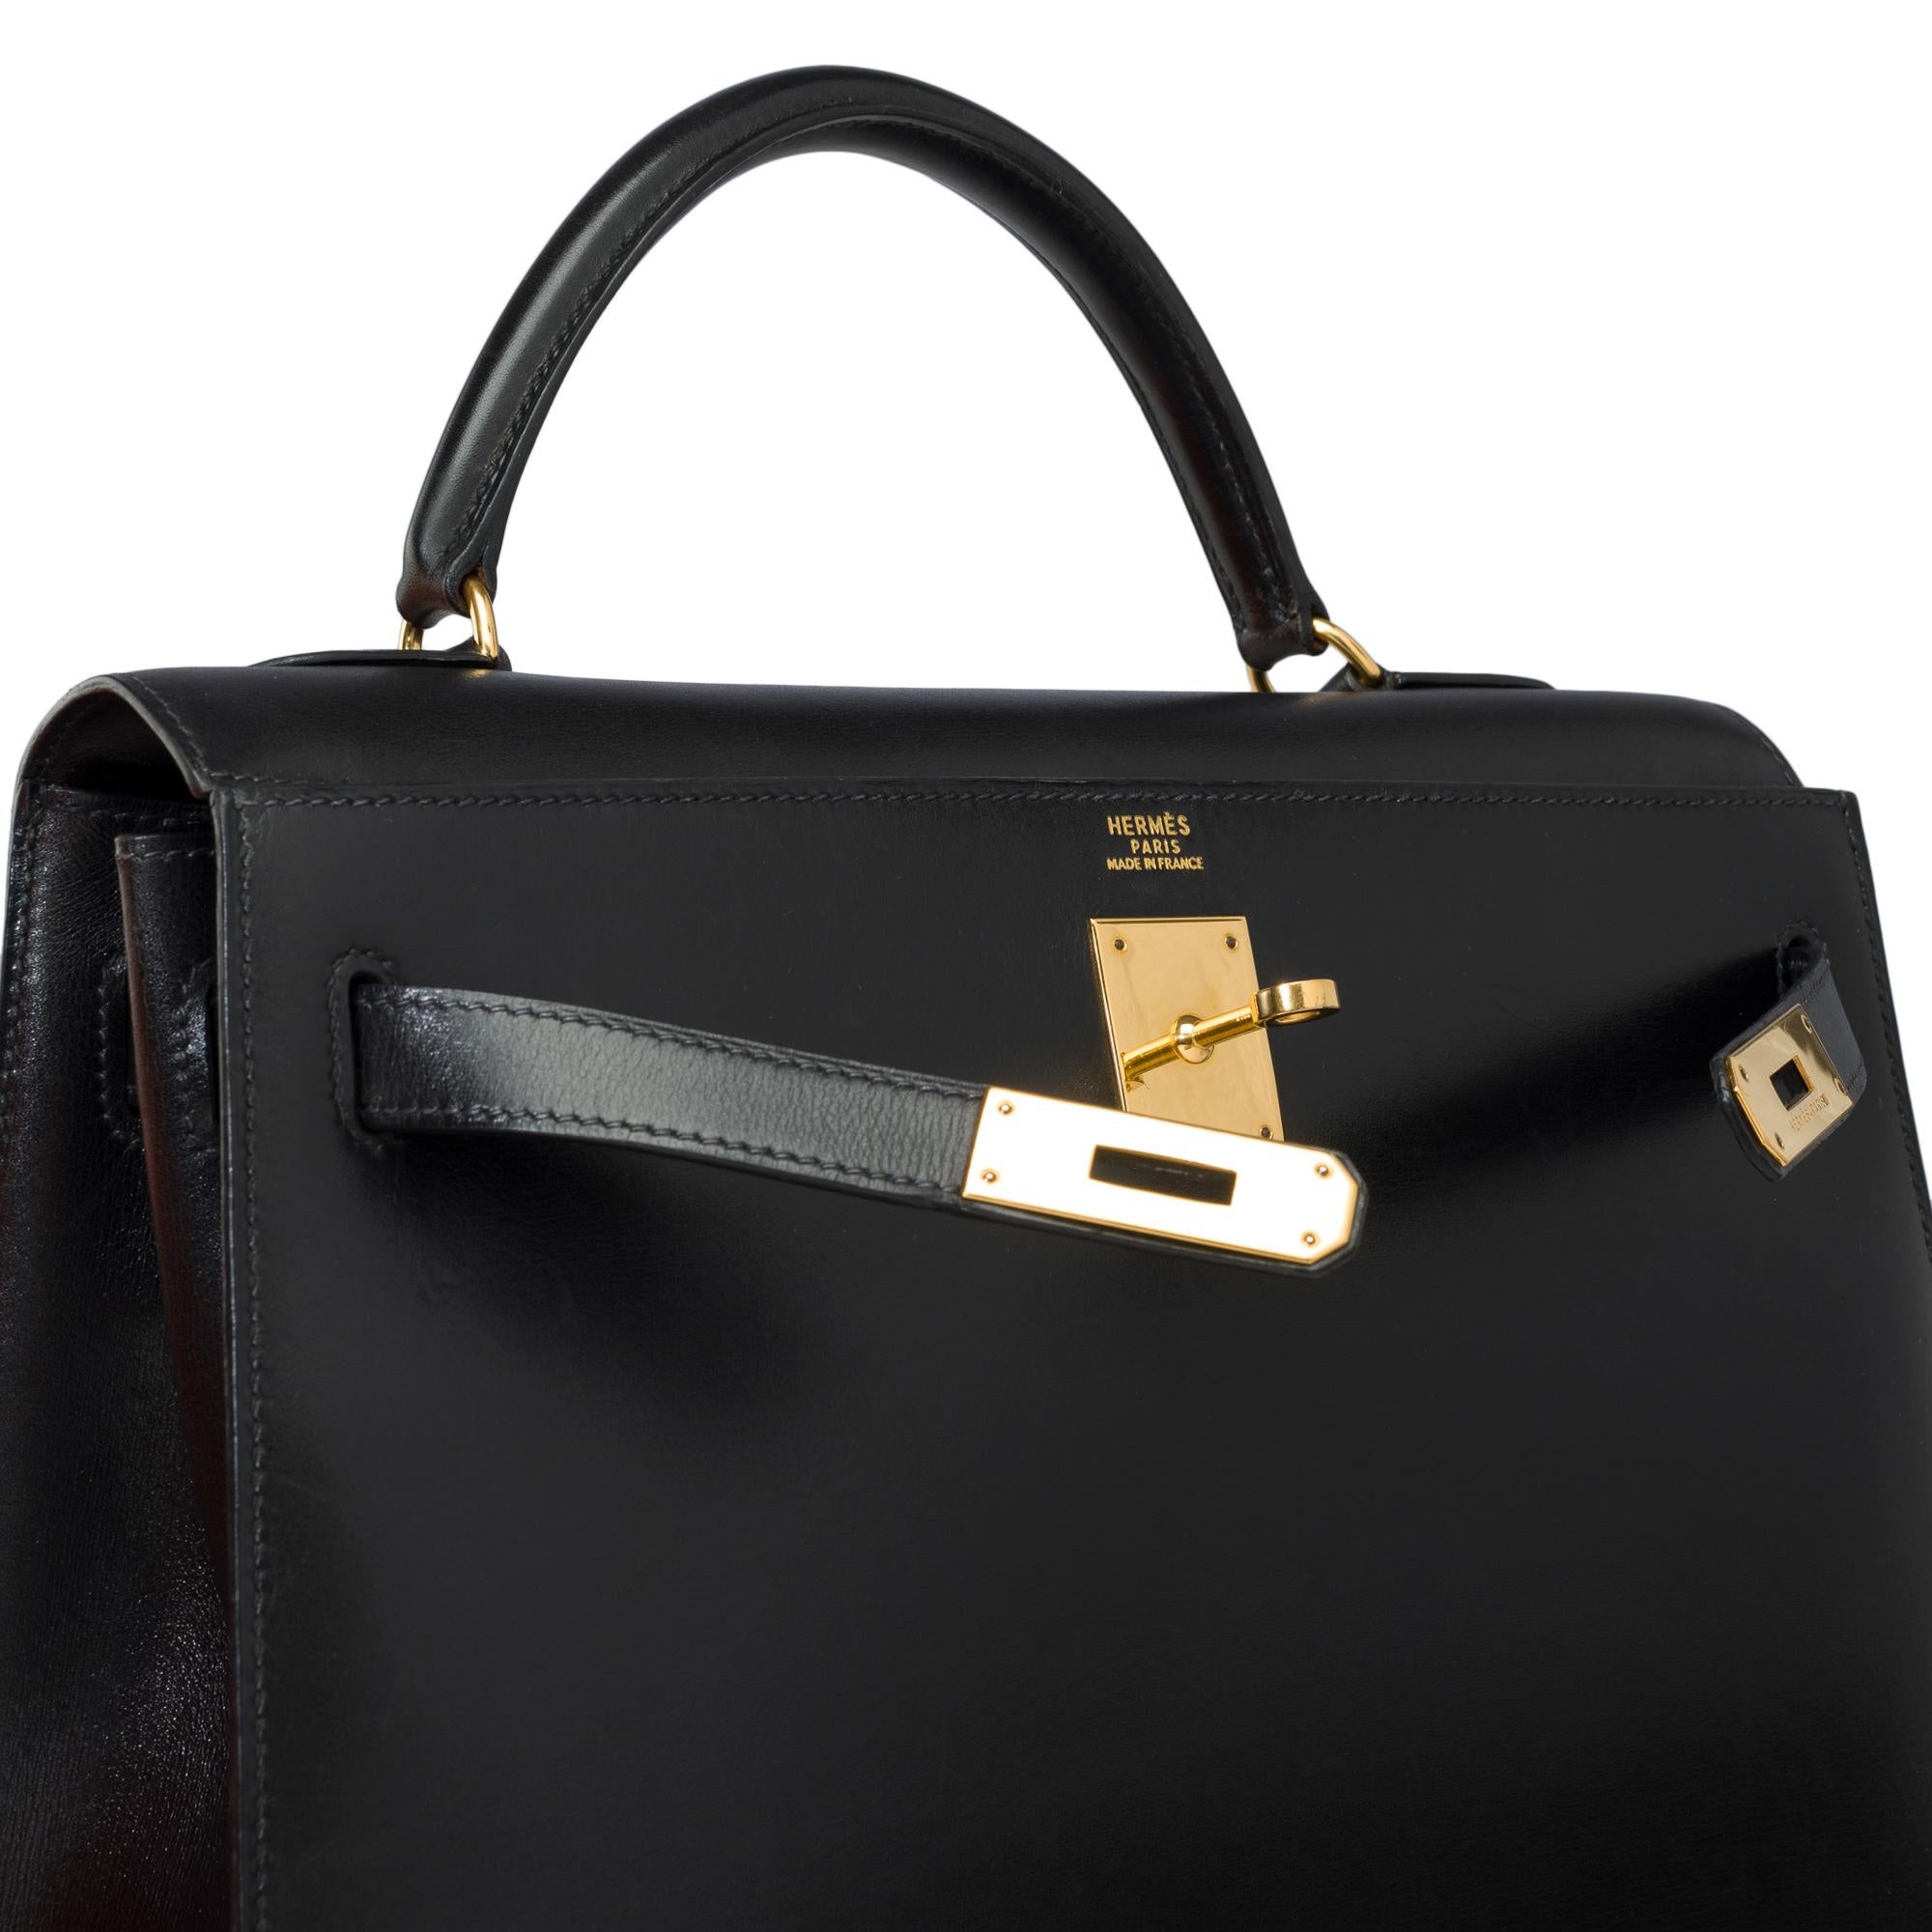 Vintage Hermès Kelly 32 sellier handbag strap in Black Box Calf leather, GHW 3